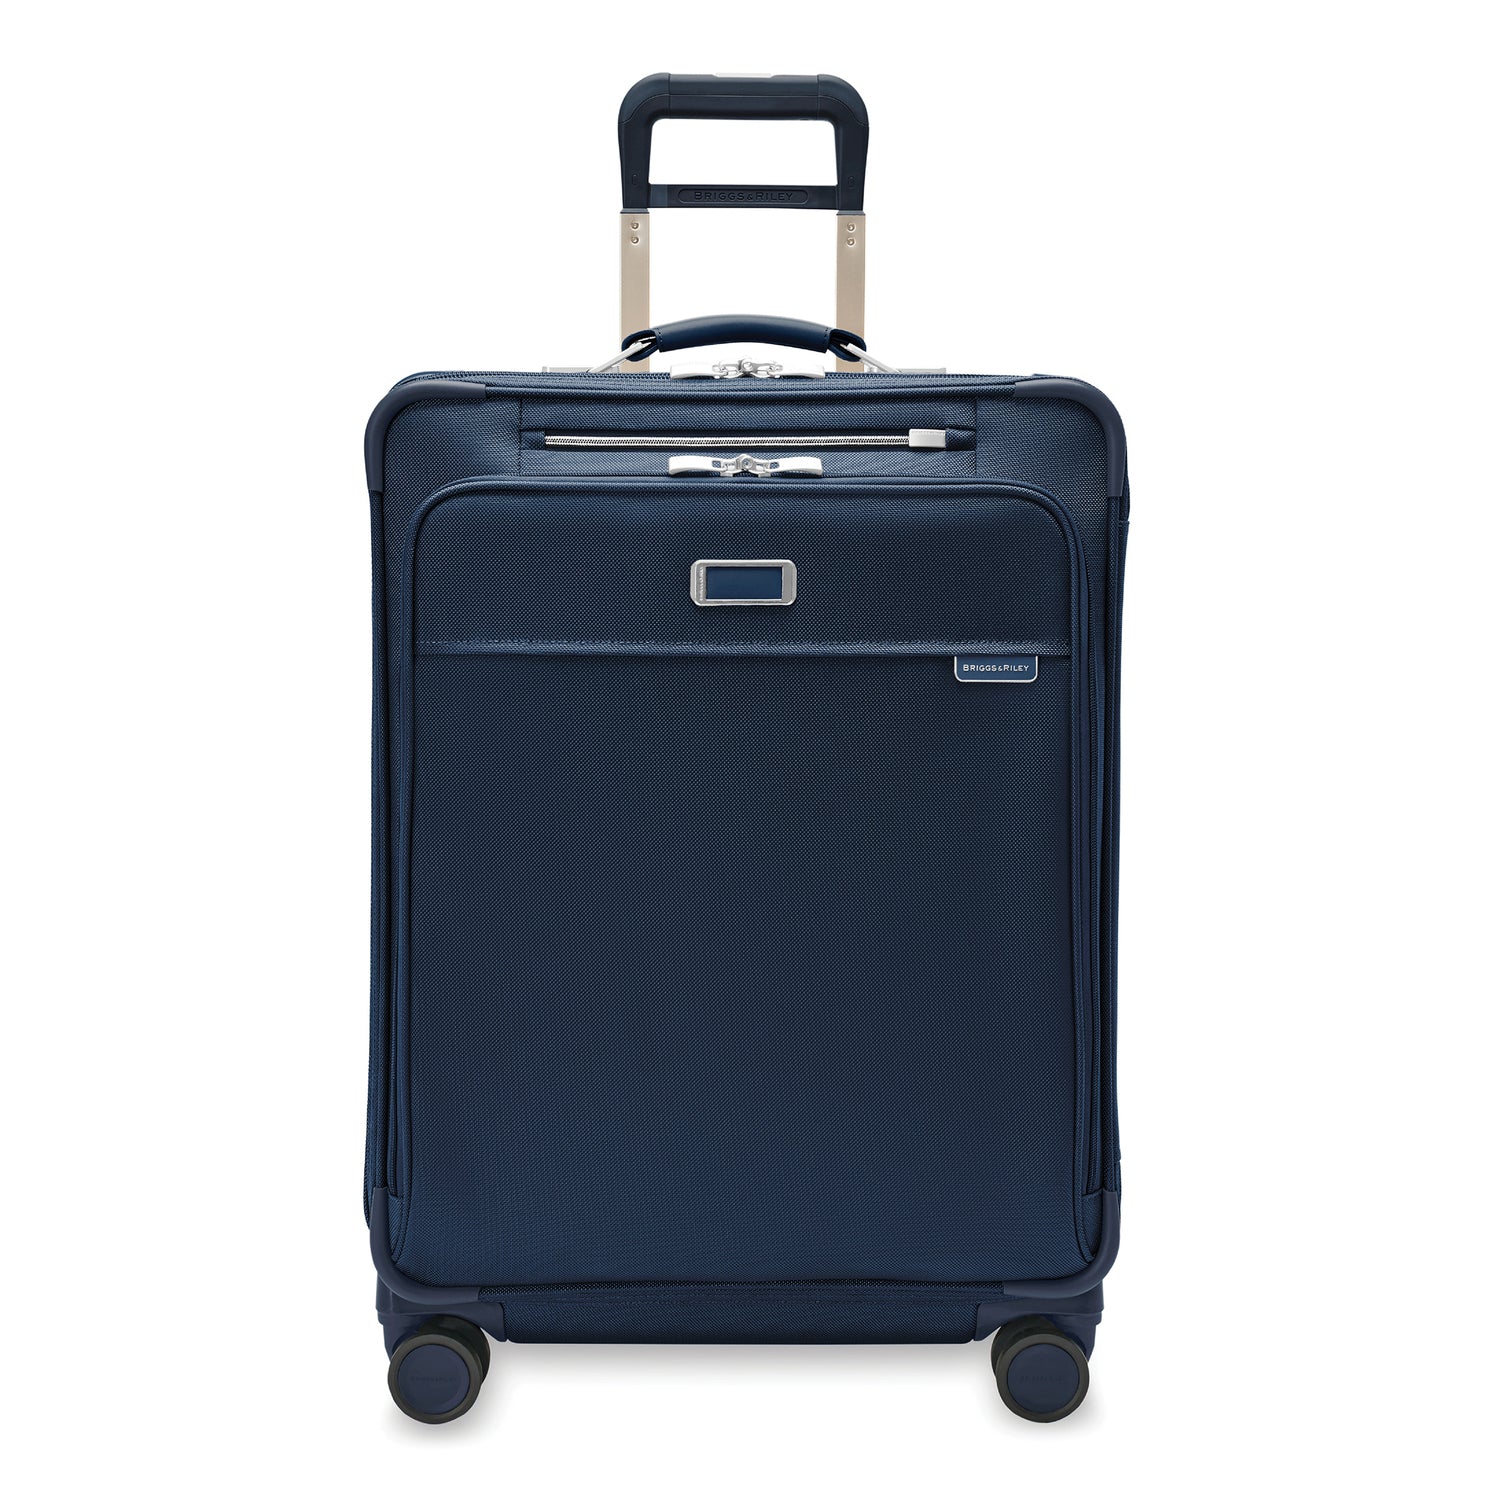 High-End Luggage | Shop Lifetime Guarantee Luxury Travel Luggage 